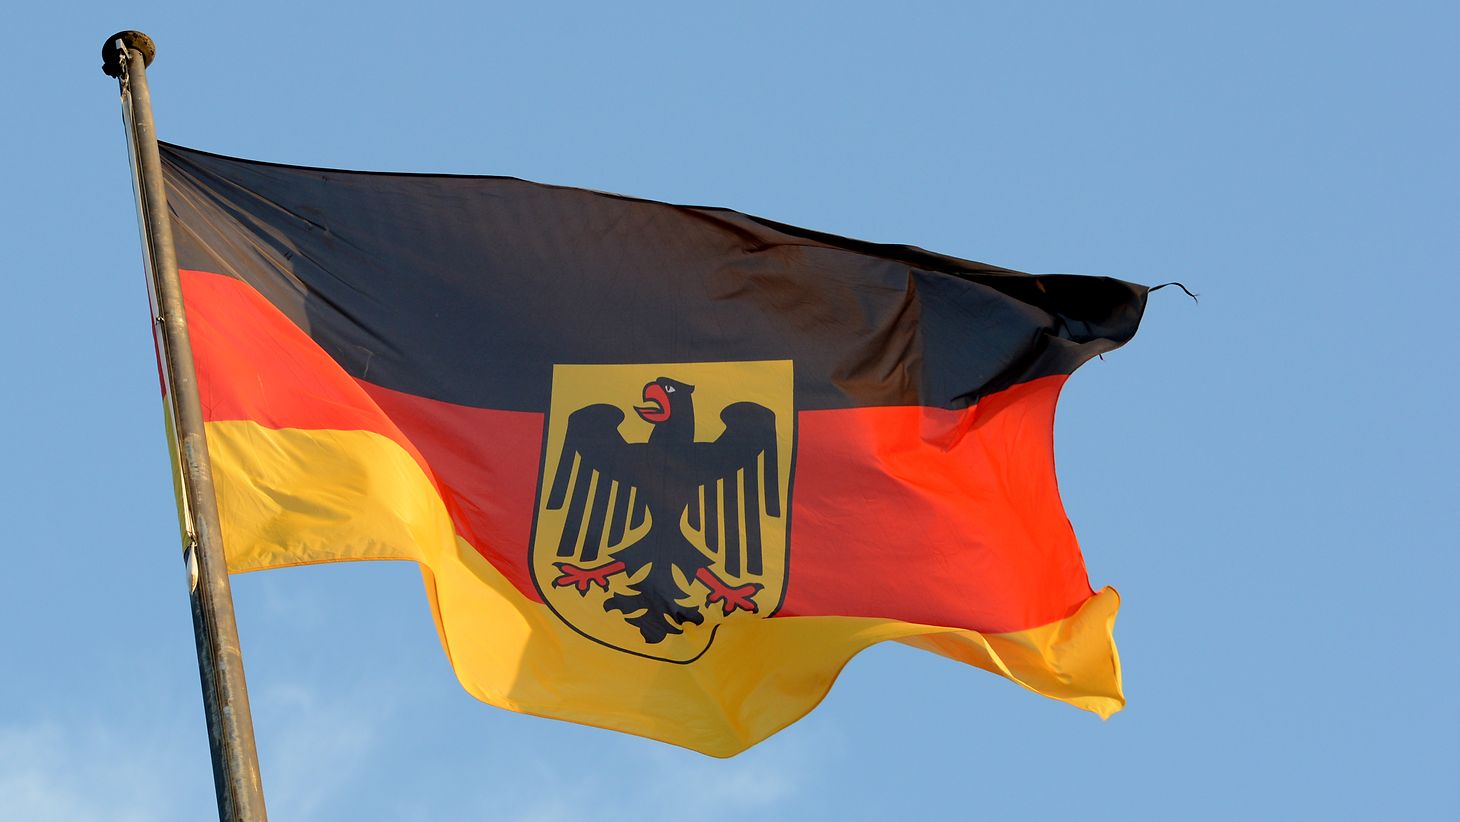 german imperial eagle crest